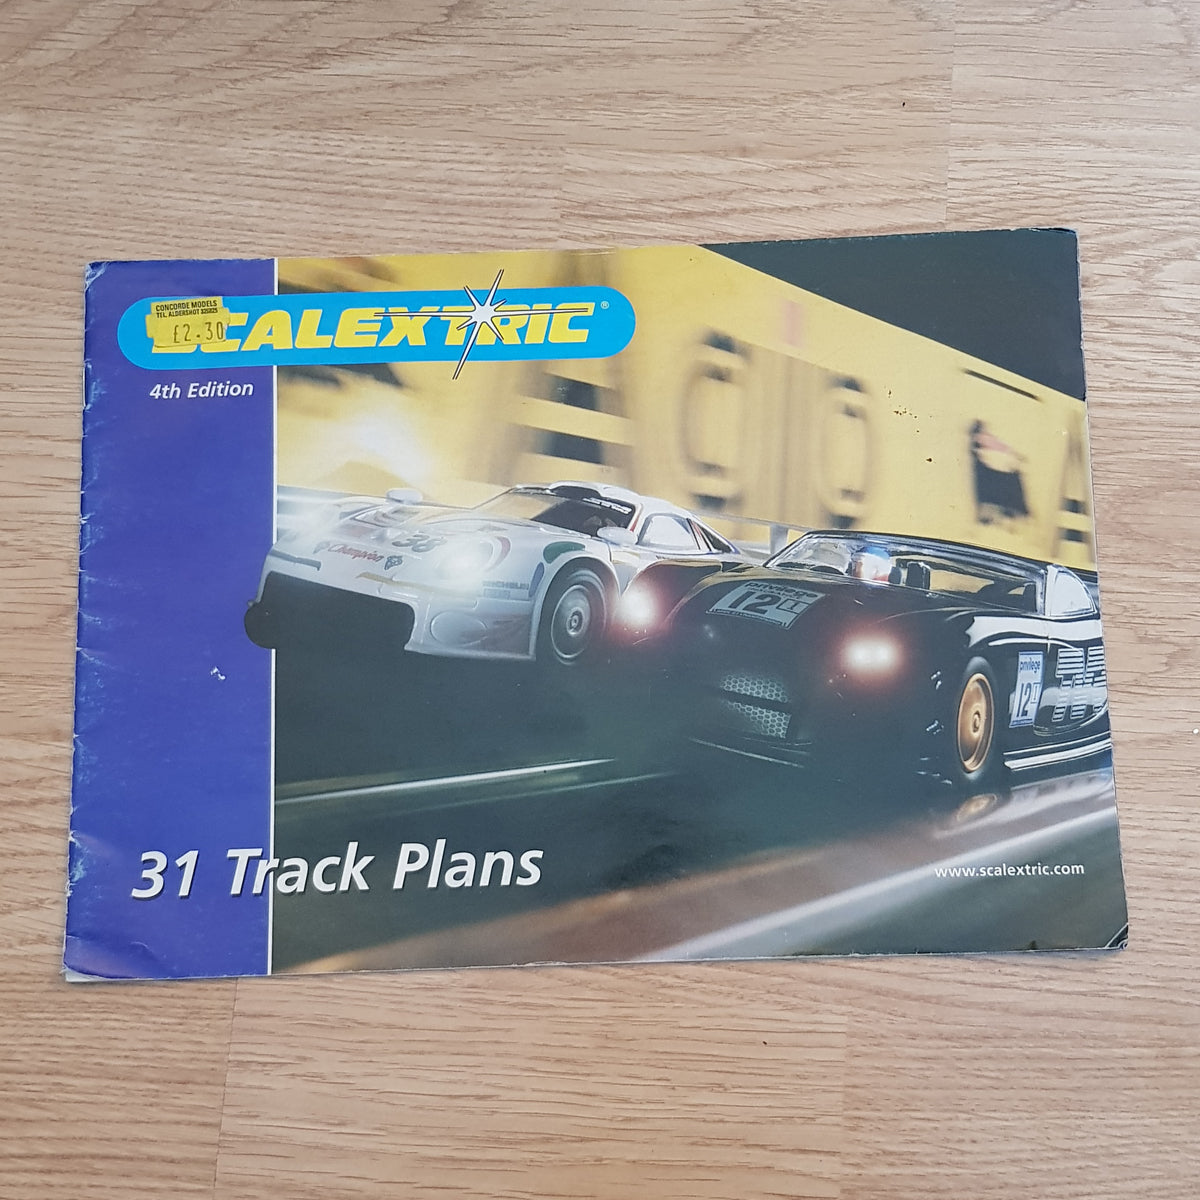 Scalextric Catalogue Literature Magazine - 4th Edition - 31 Track Plans